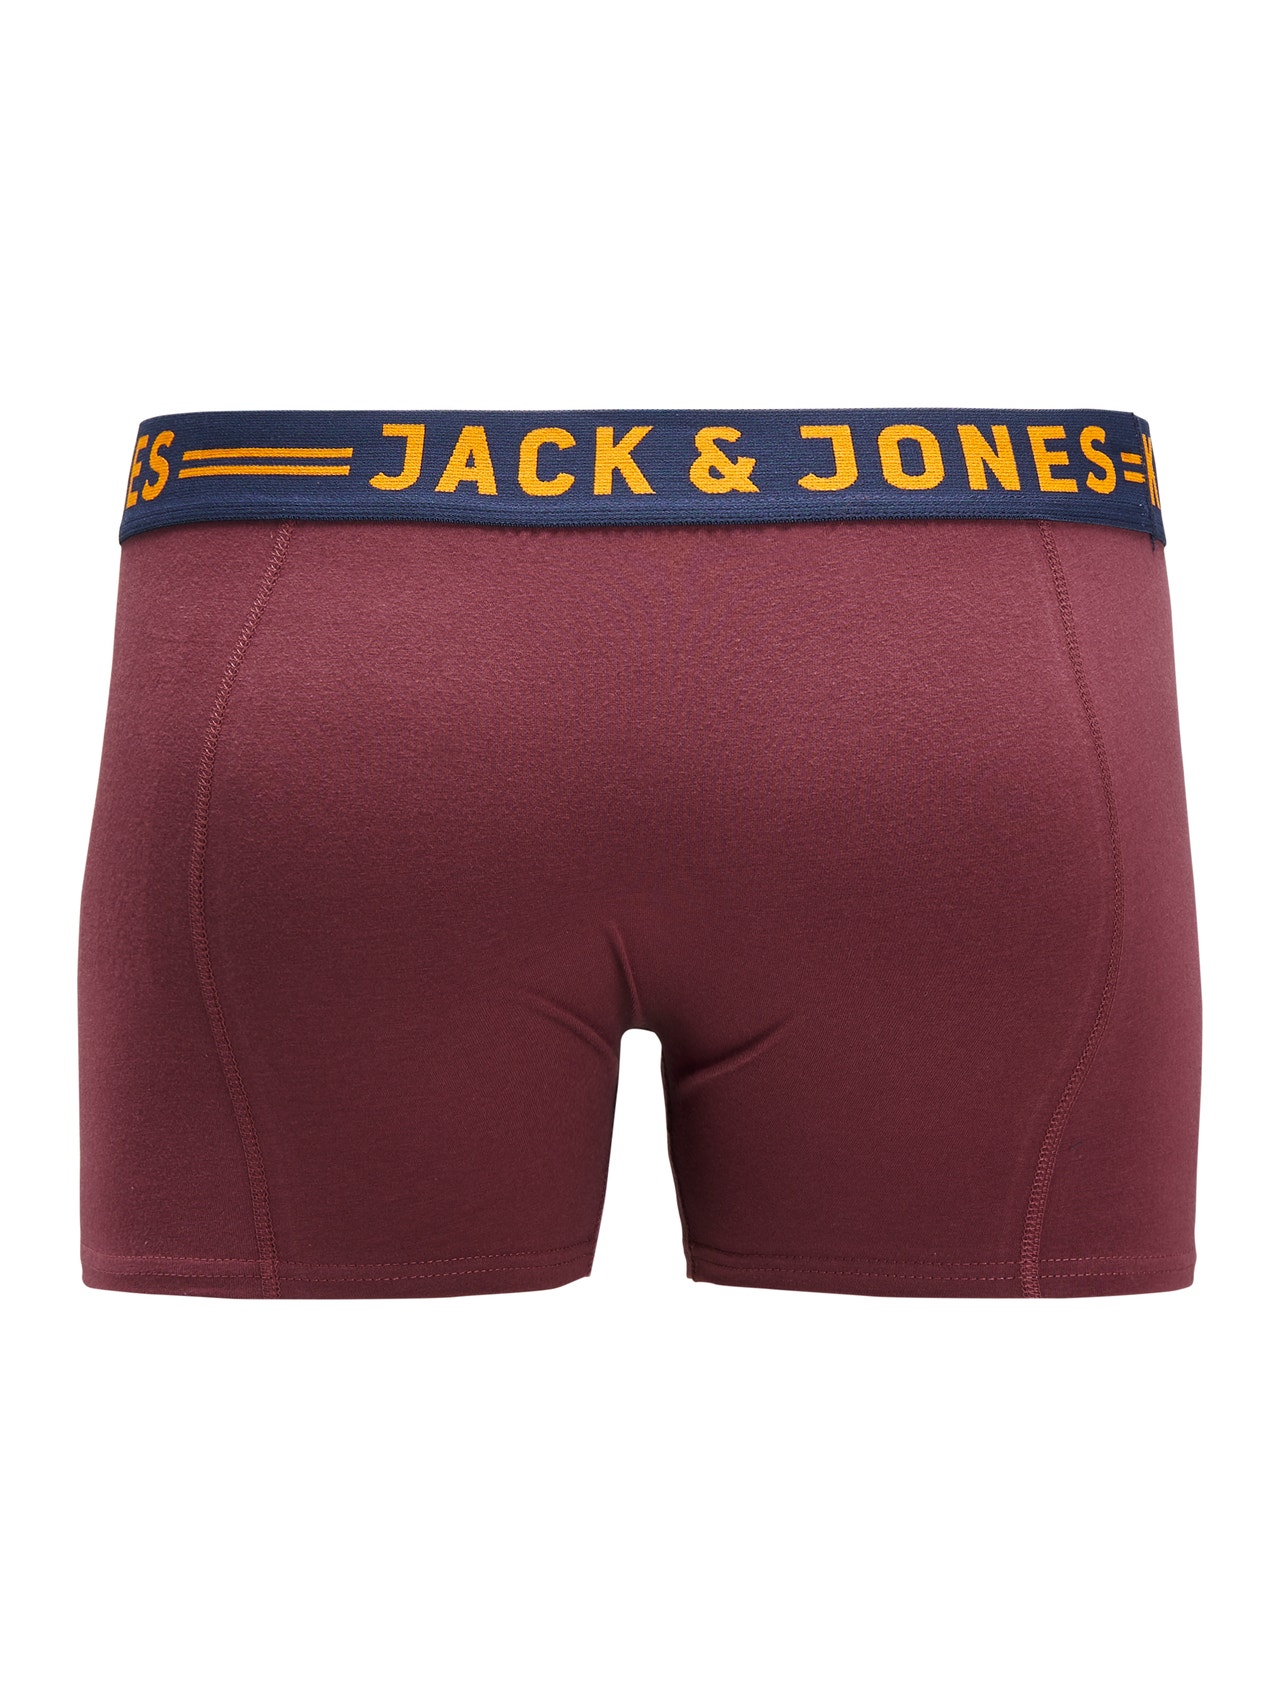 Jack & Jones Plus Size 3-pak Trunks -Burgundy - 12147592